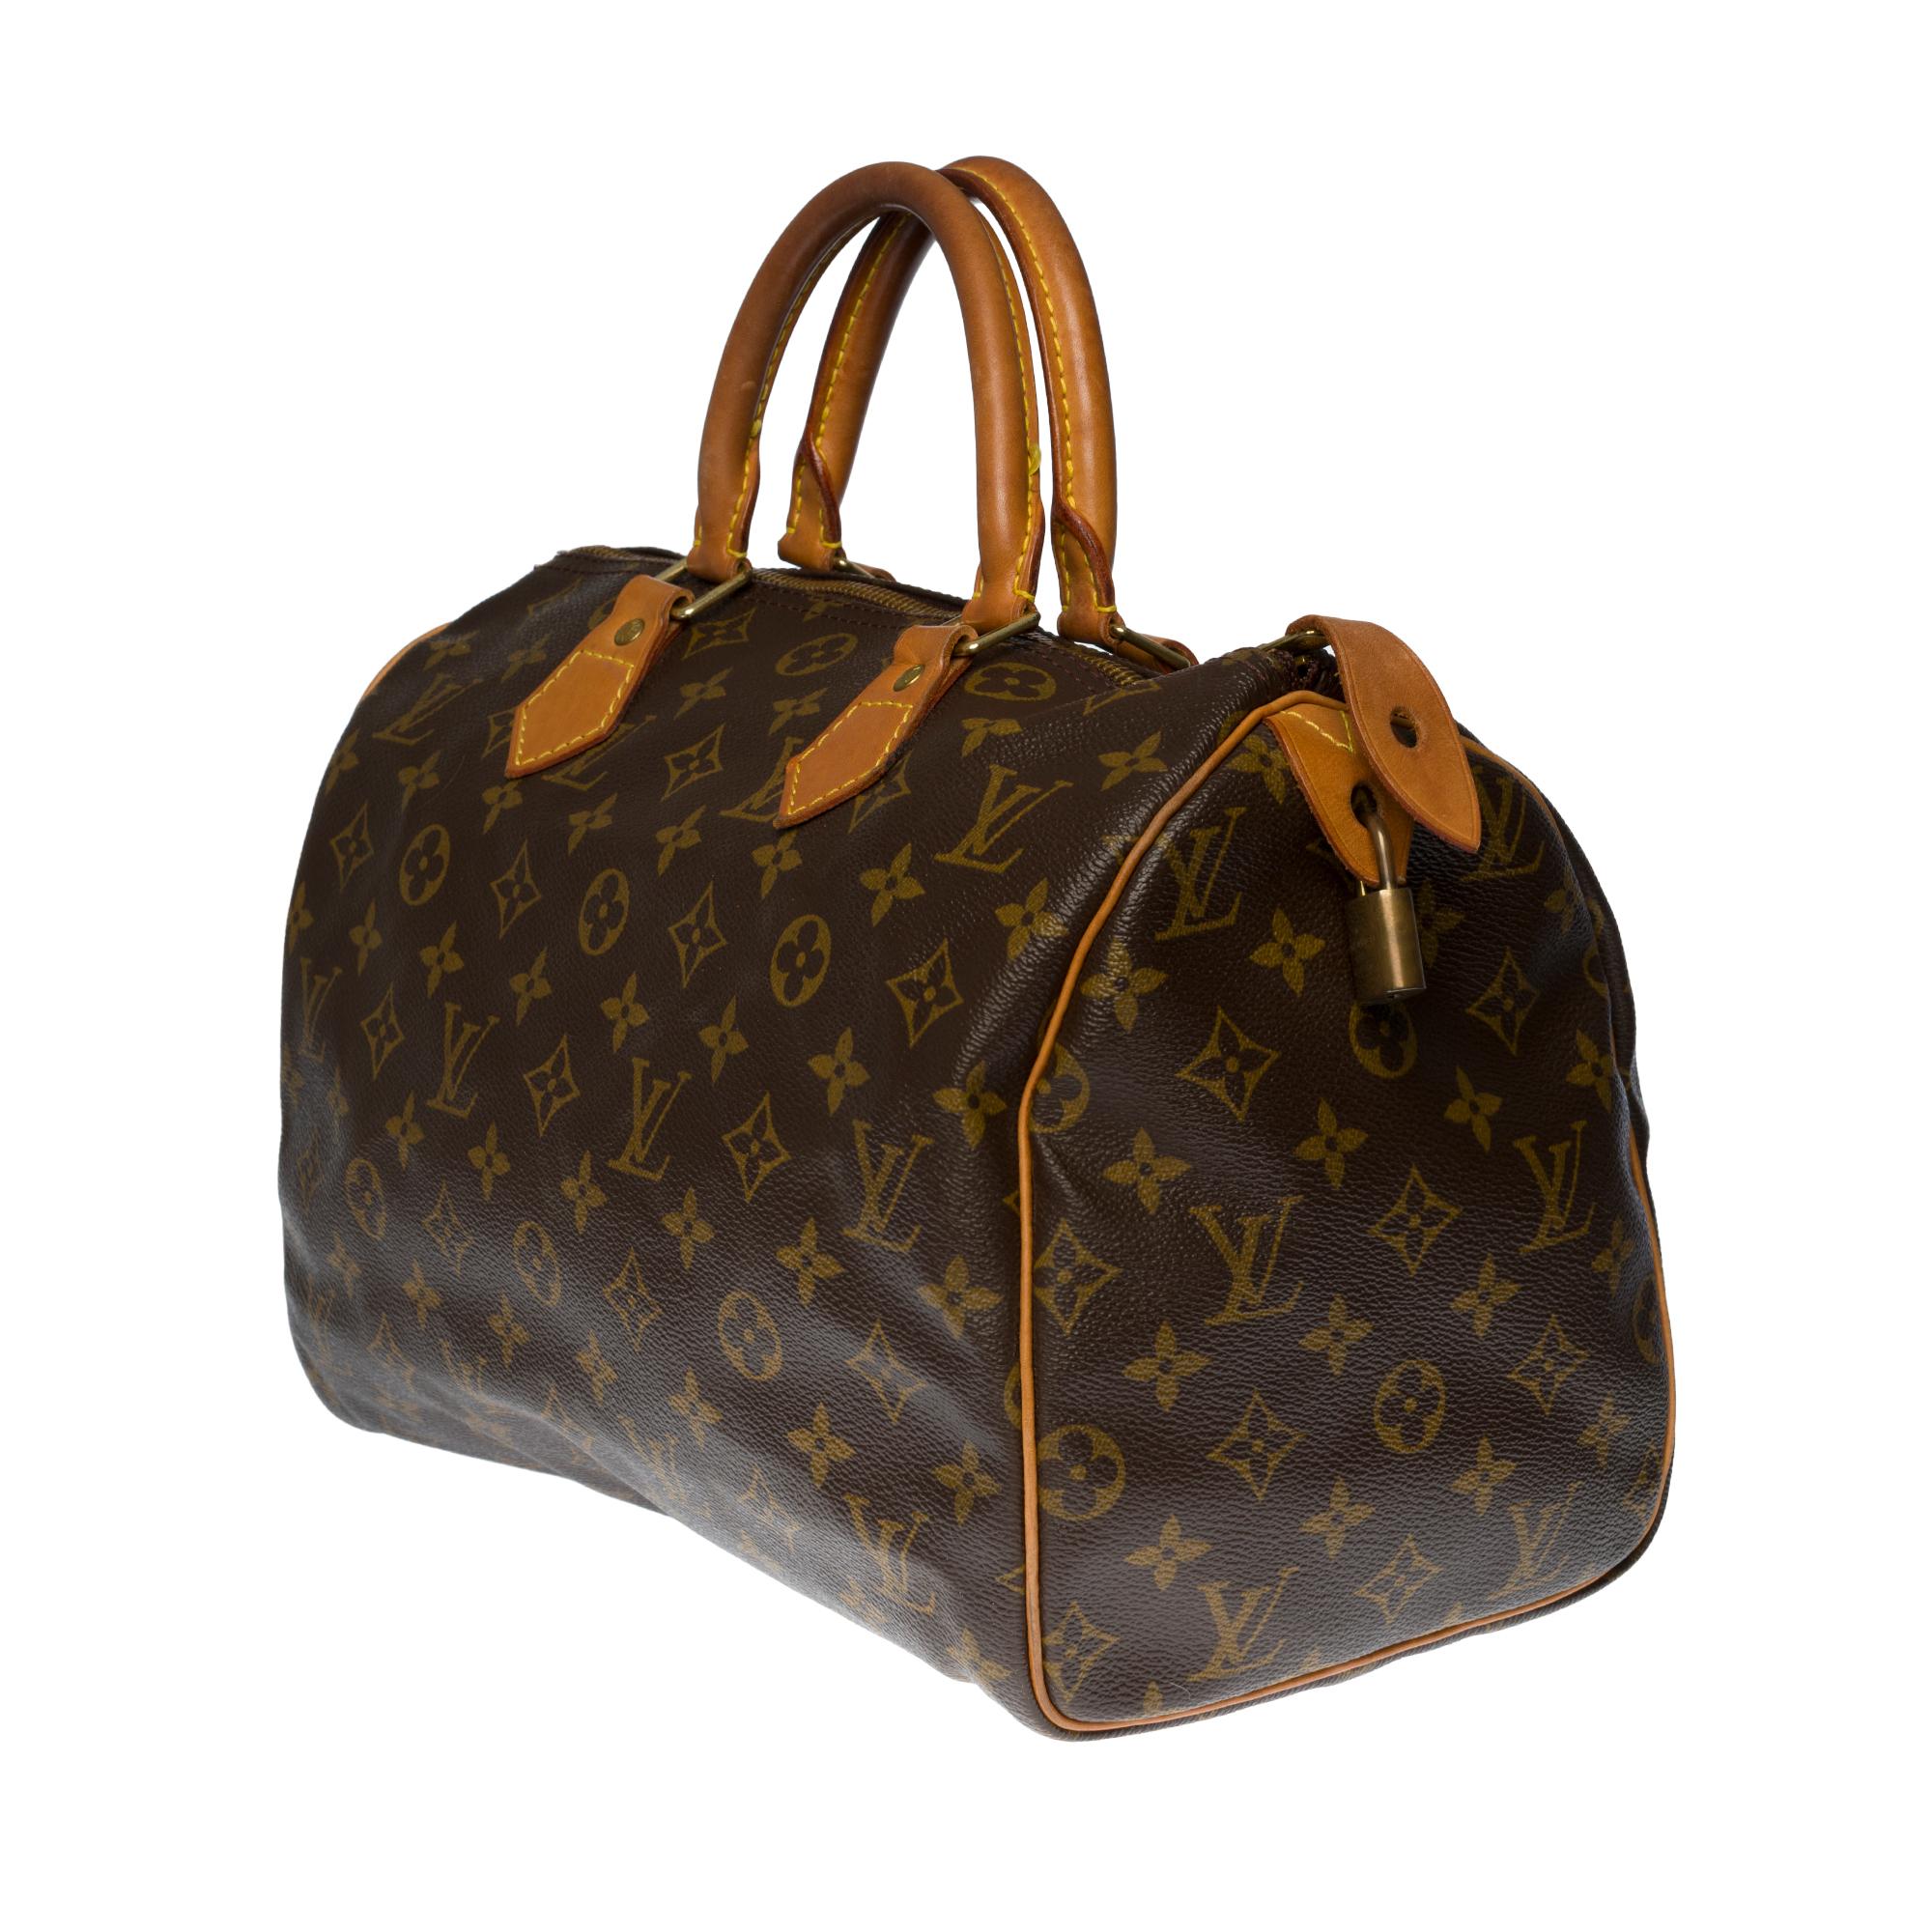 Black Louis Vuitton Speedy 30 handbag in brown canvas